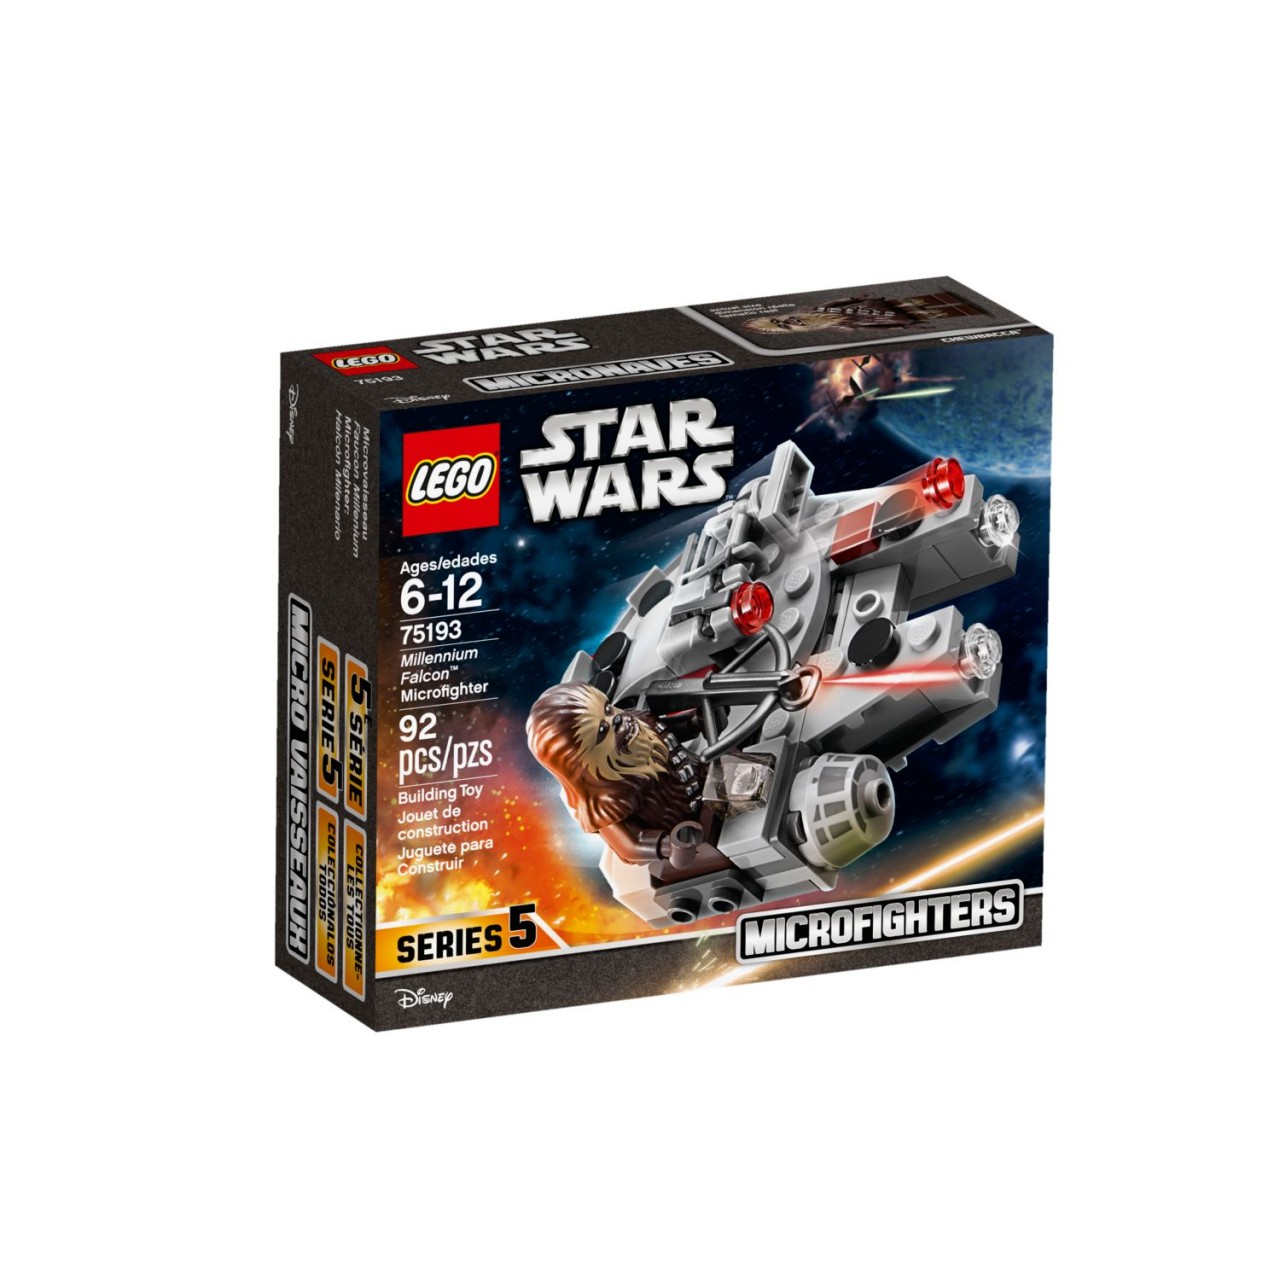 LEGO STAR WARS 75193 Millennium Falcon Microfighter